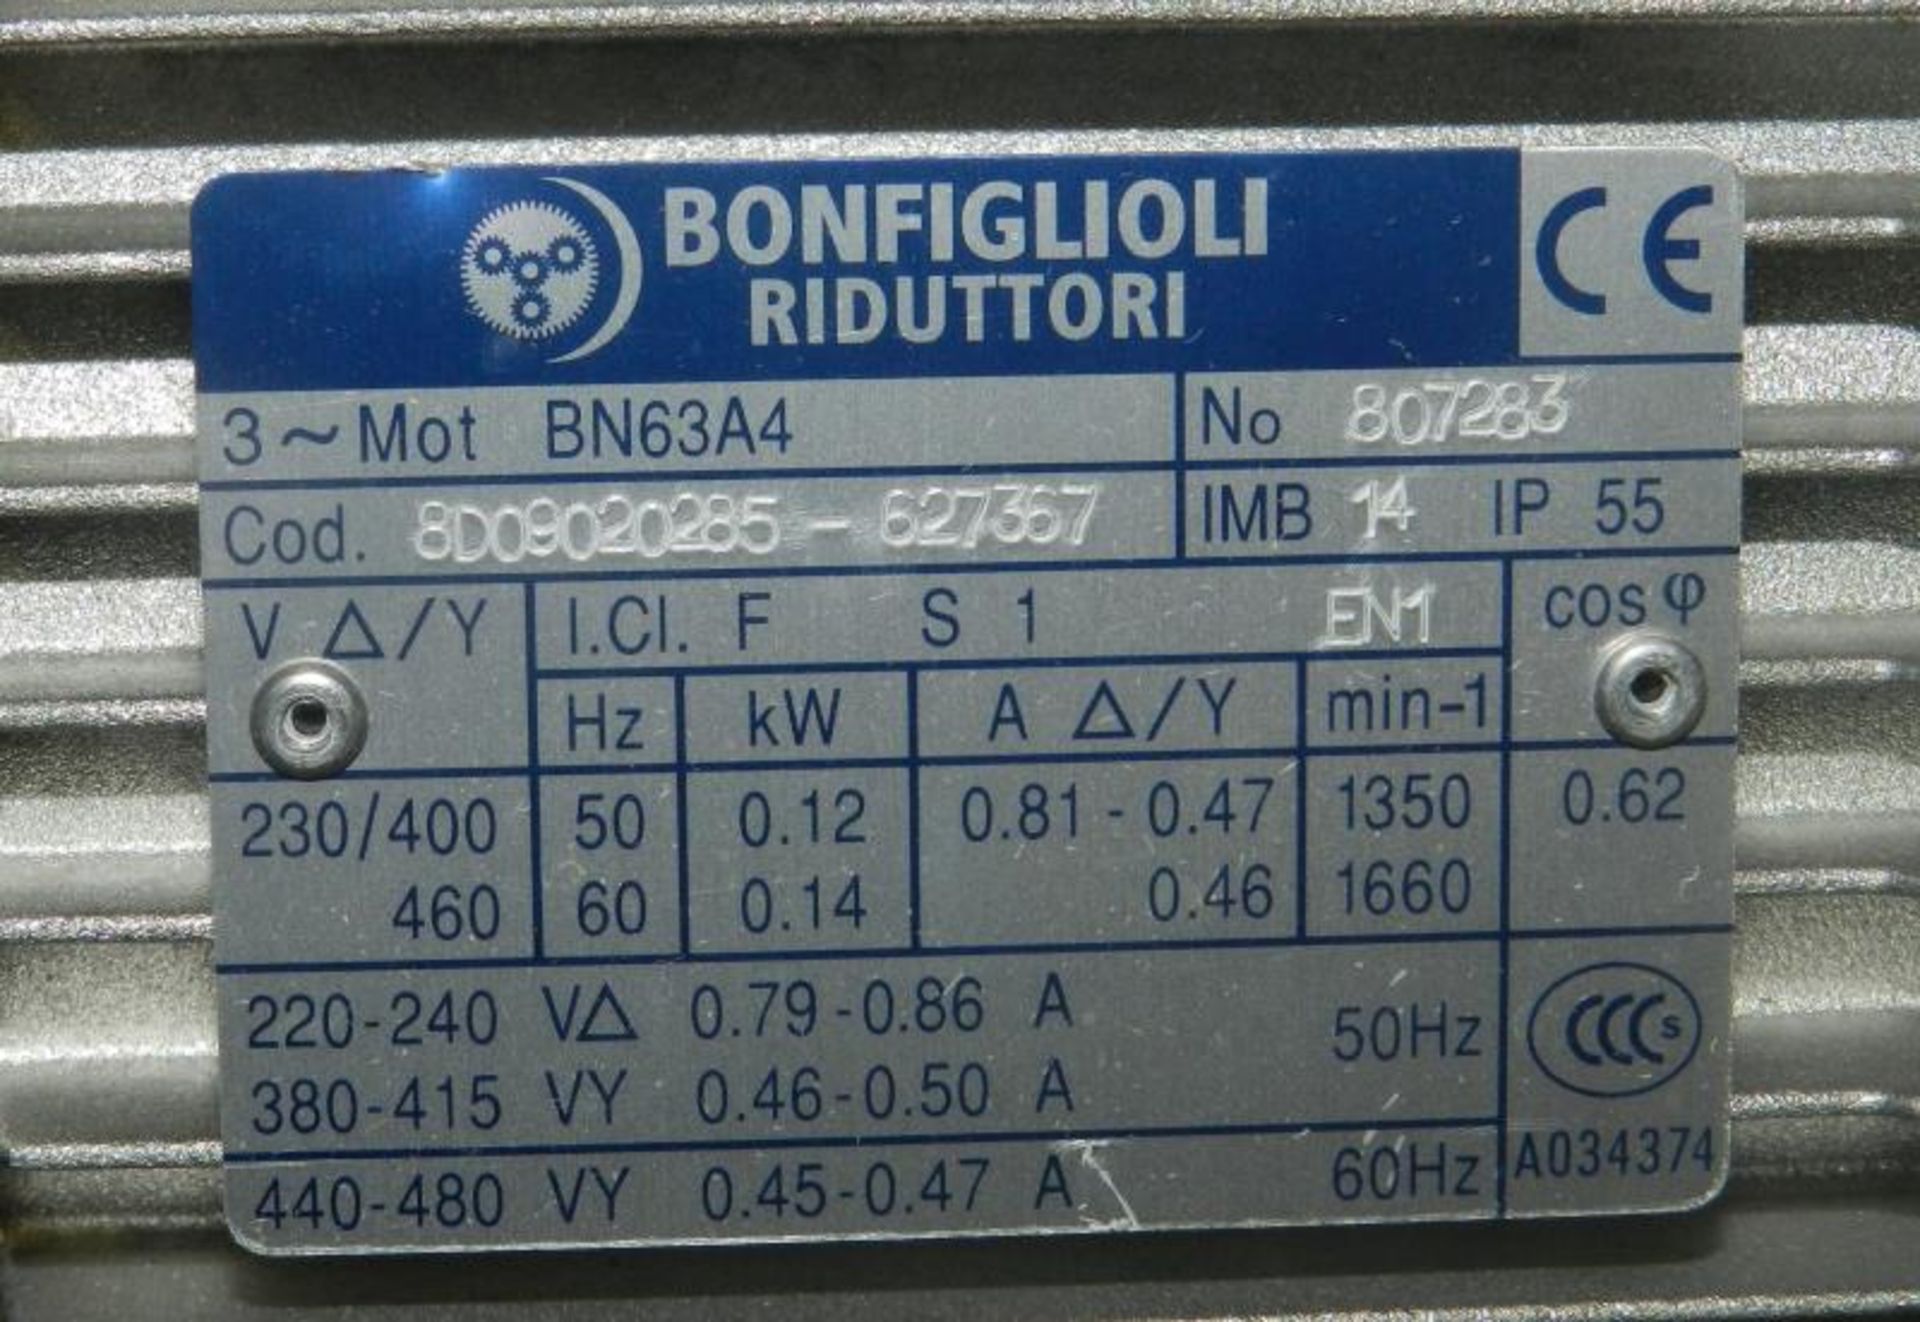 Bonfiglioli Riduttori BN63A4 Motor 0.12/0.14 kW w/ Encoder ~ New in Box - Image 4 of 4